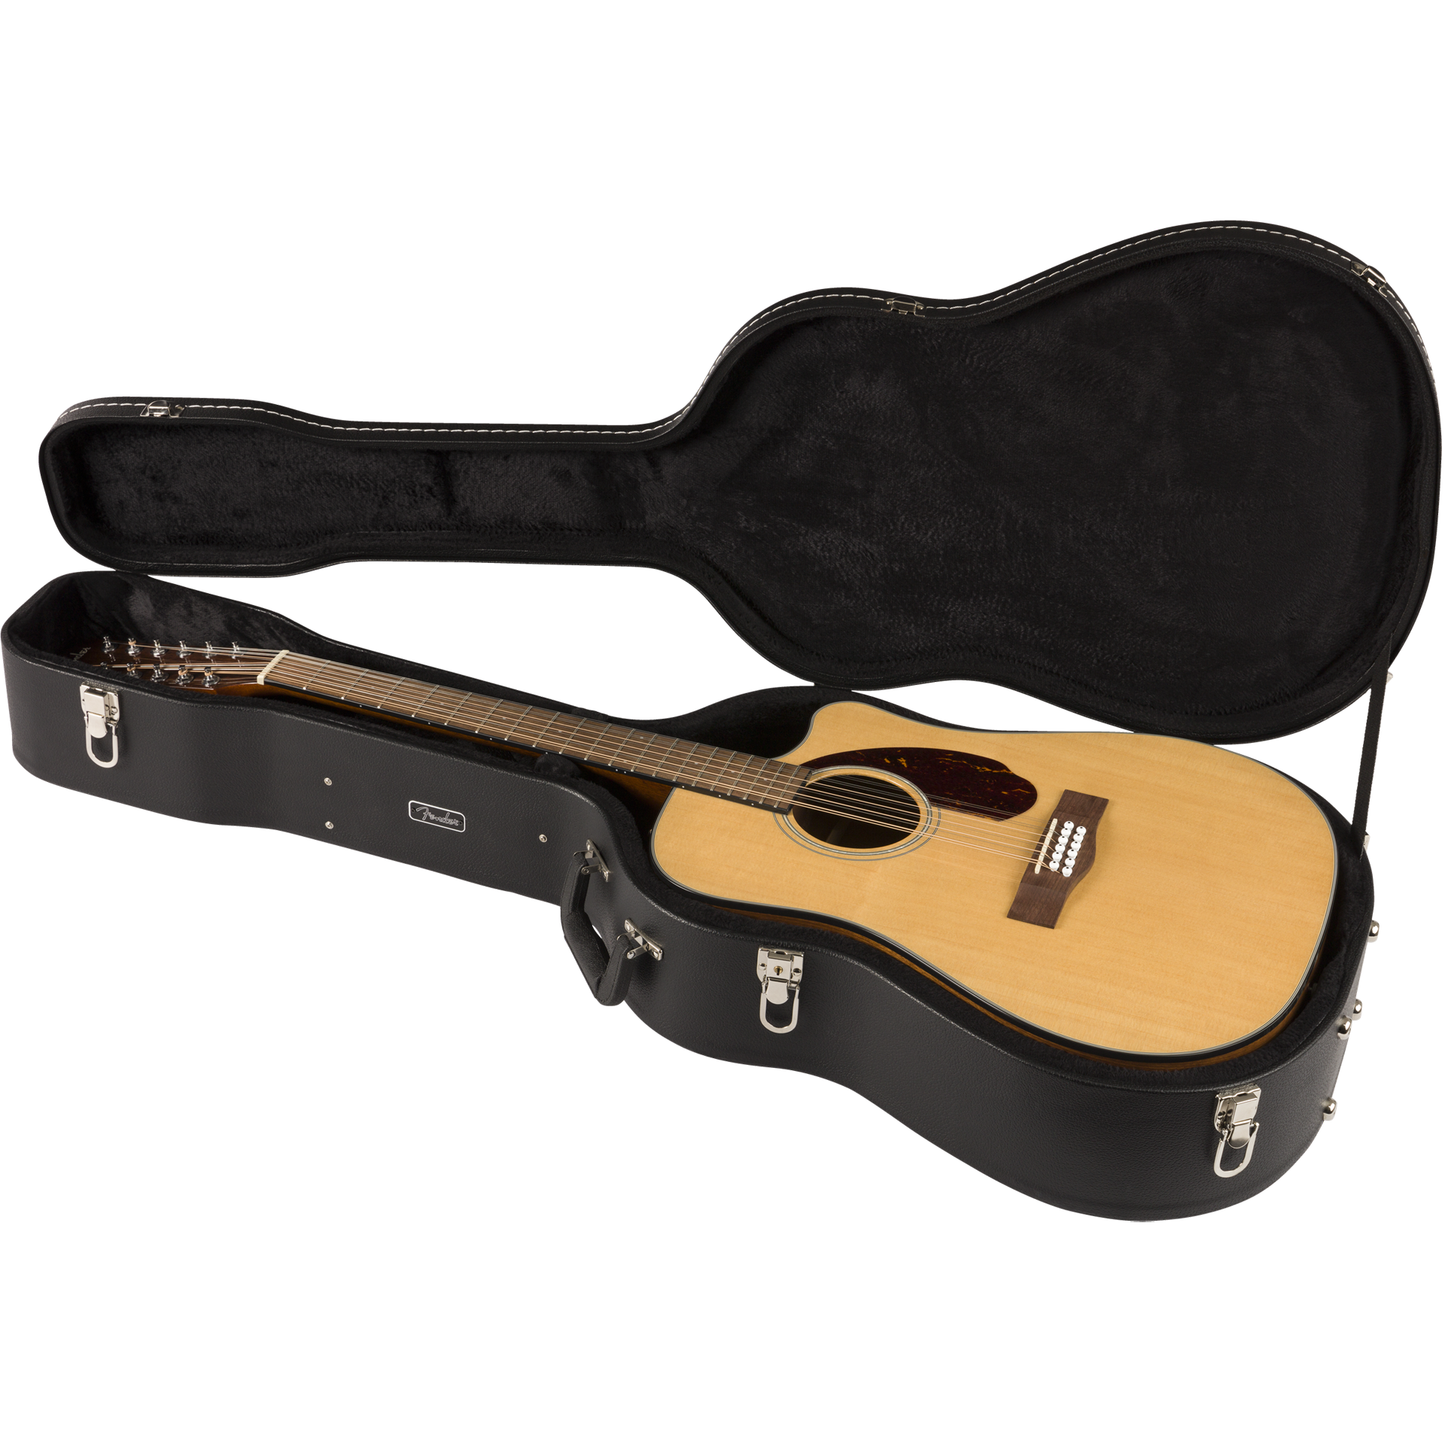 Fender CD-140SCE 12-String Acoustic Electric Guitar - Walnut Fingerboard, Natural